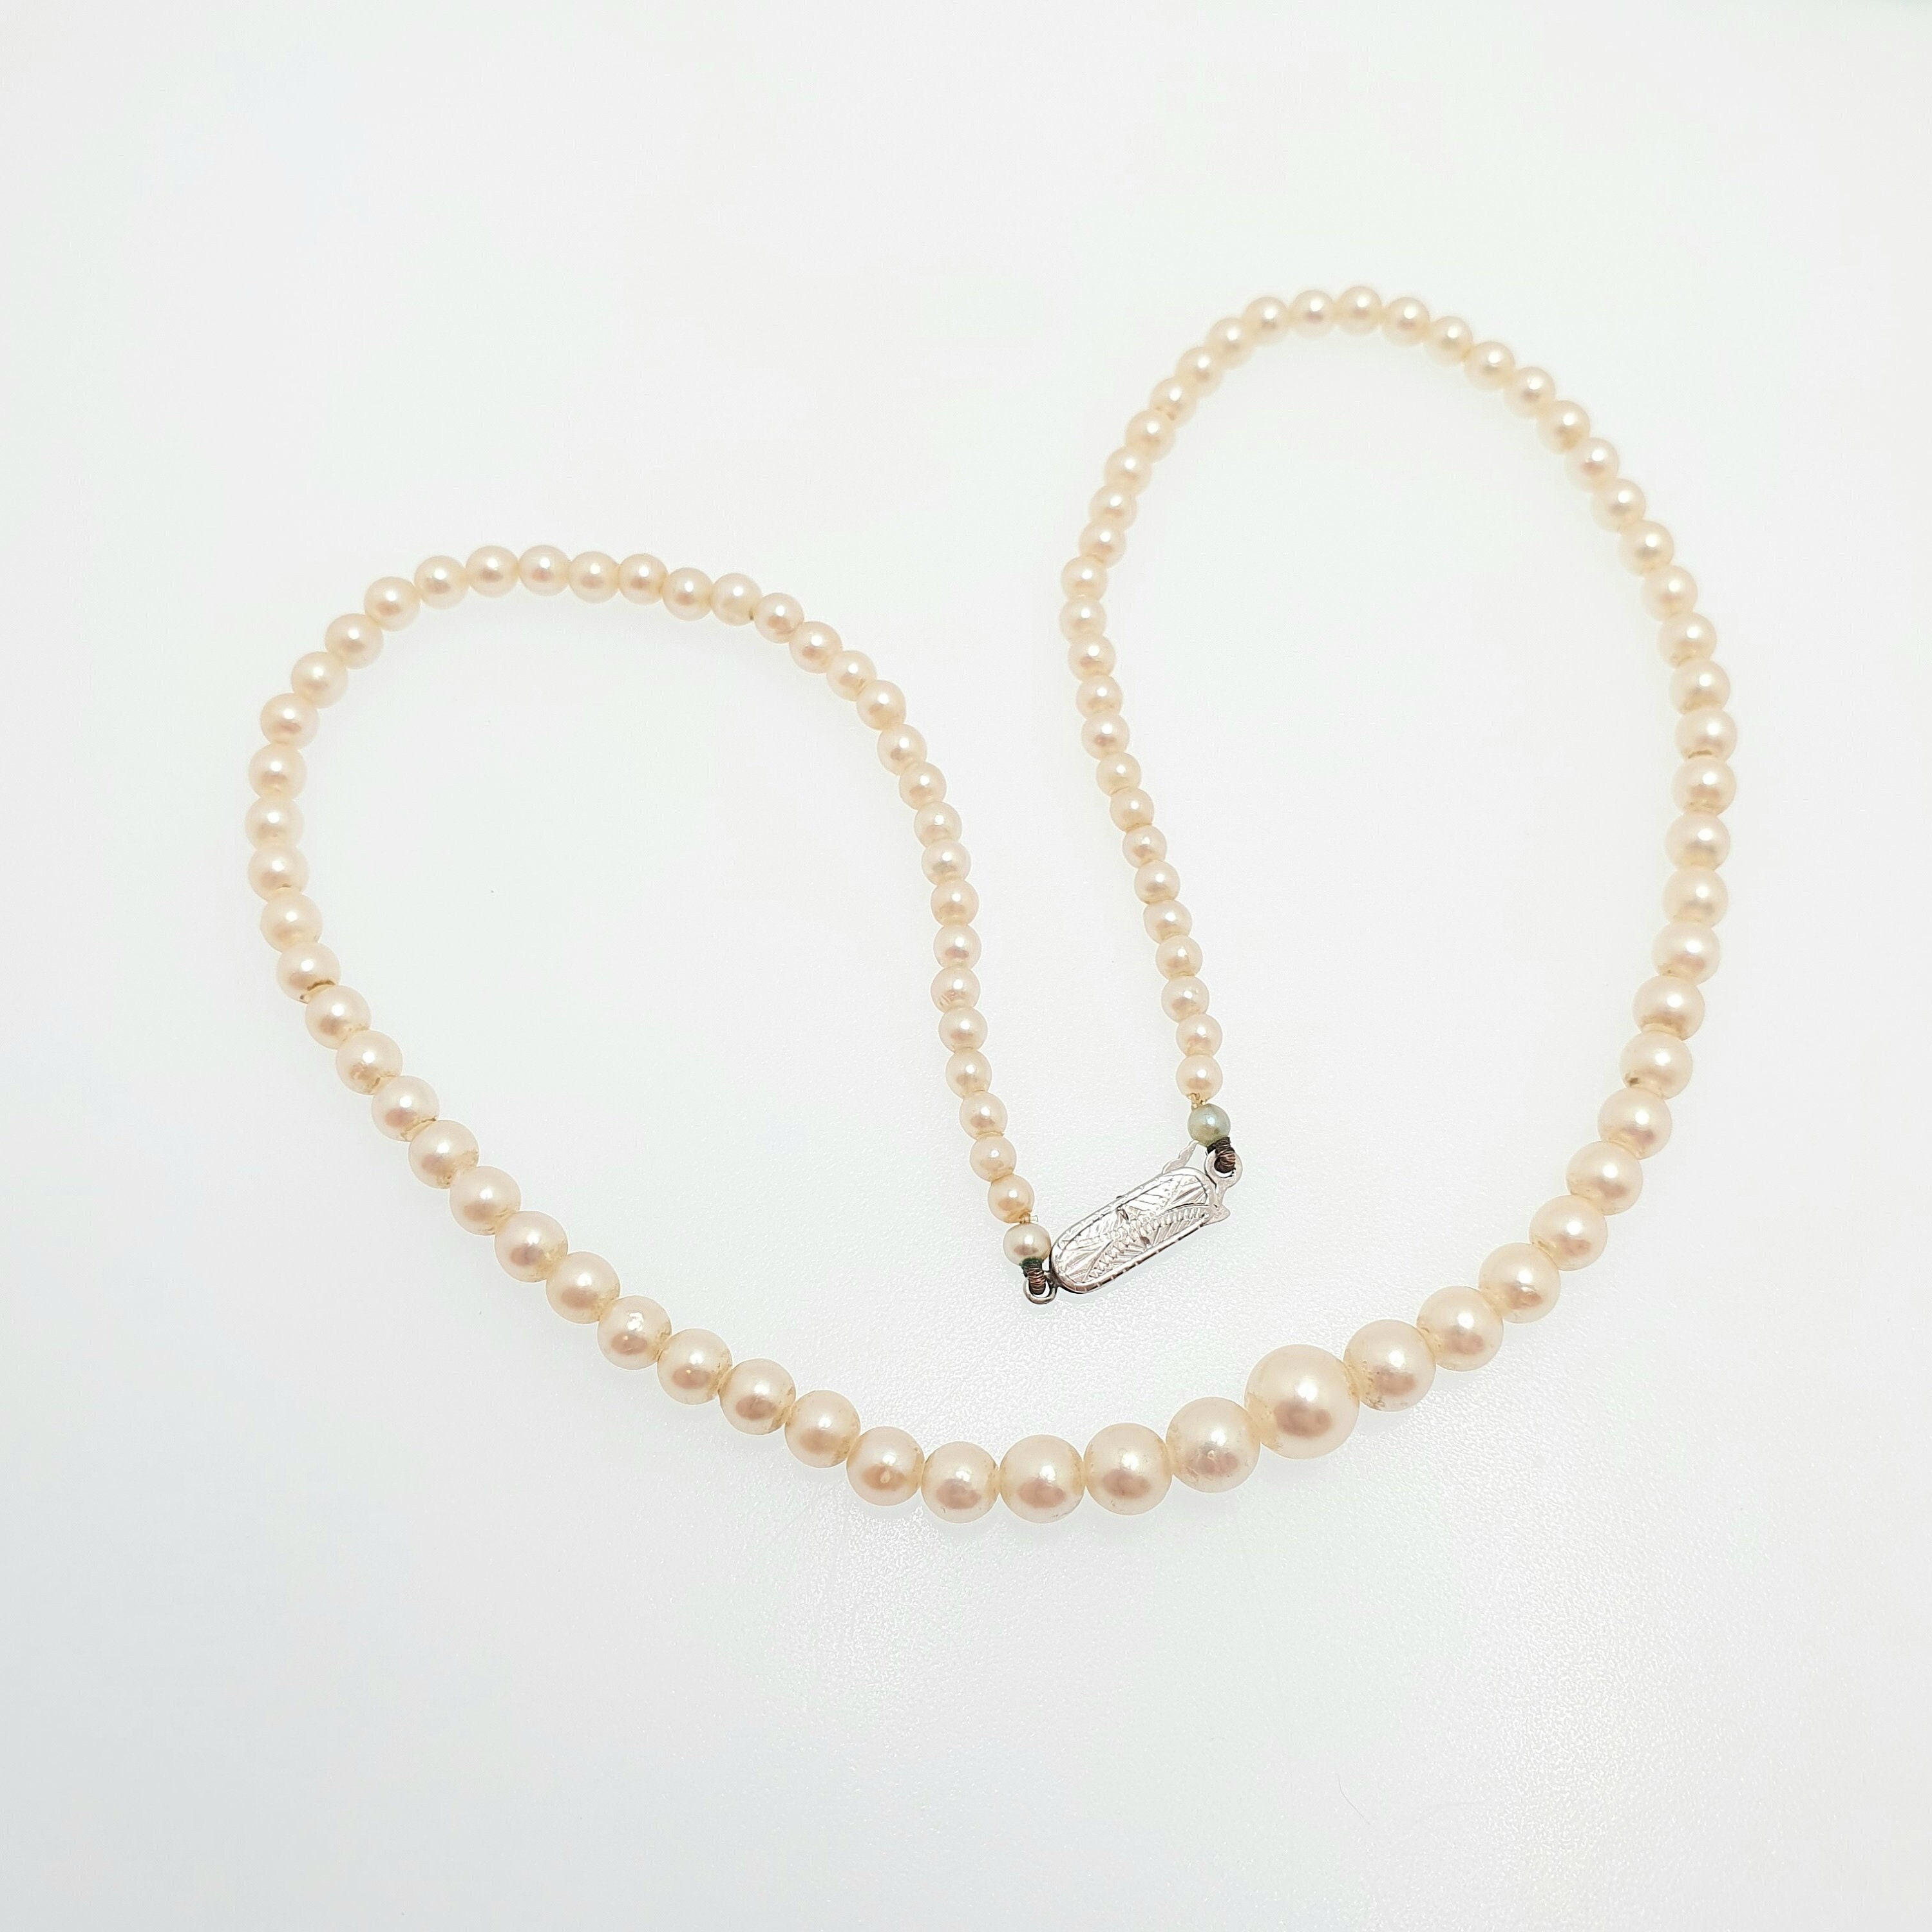 Antique Art Deco 9ct 9k Cultured Pearl Necklace White Gold 